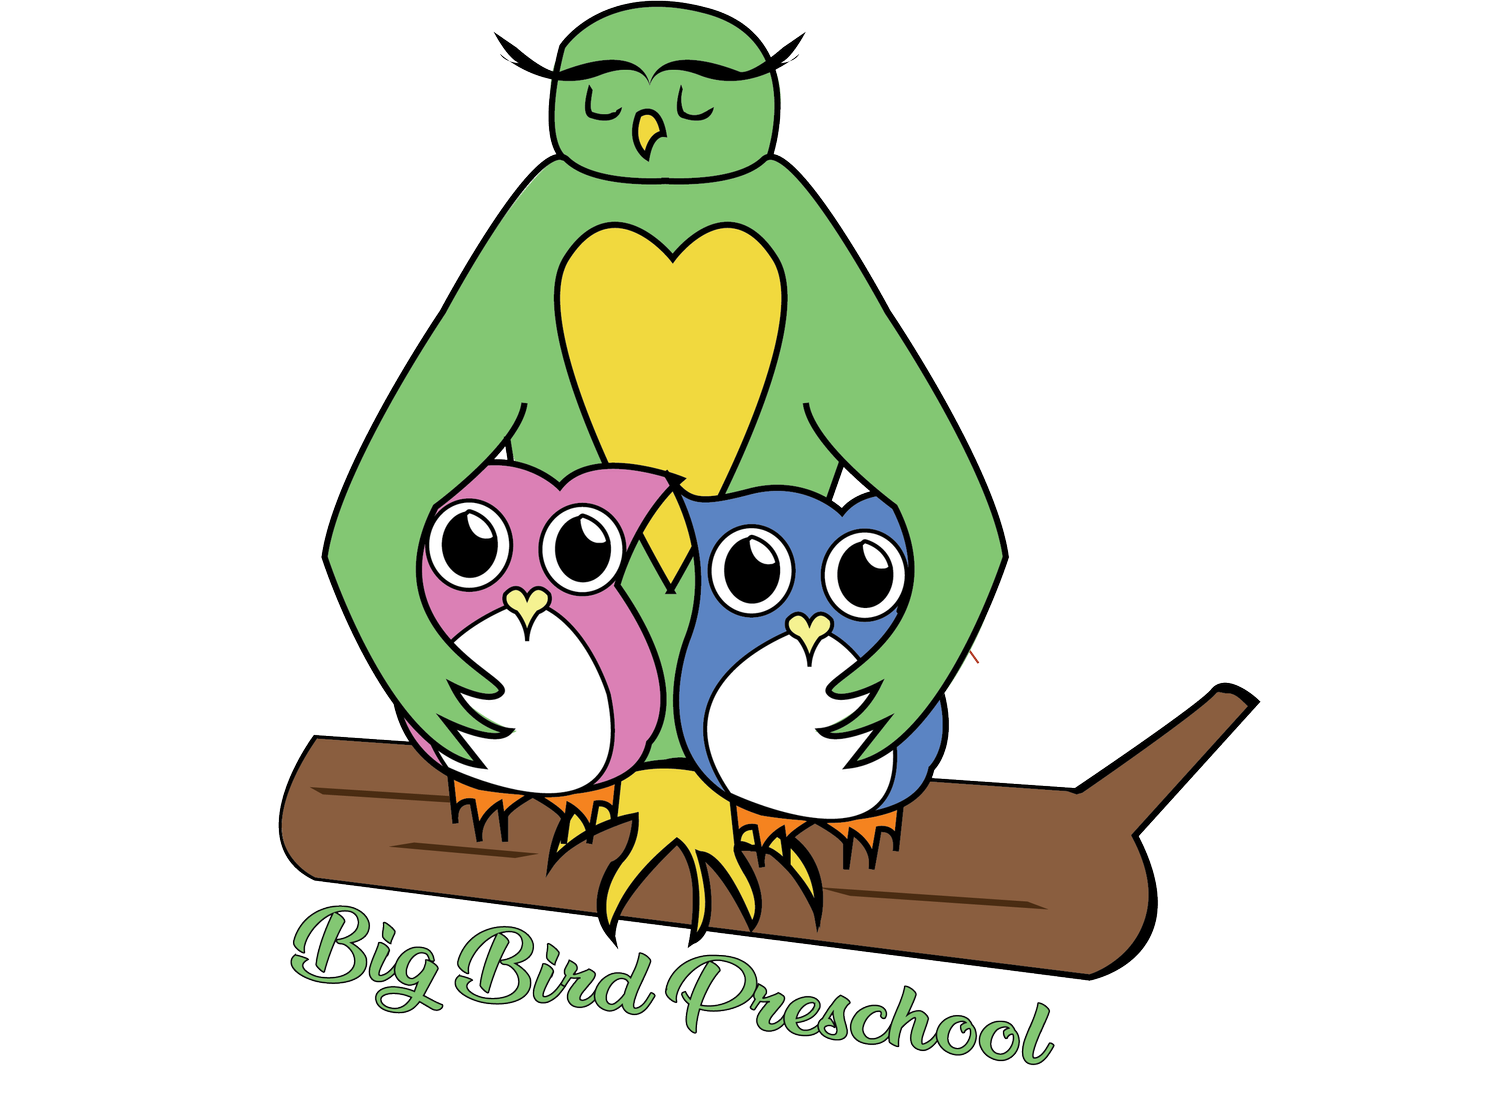 Big Bird Preschool LIC # 414004890